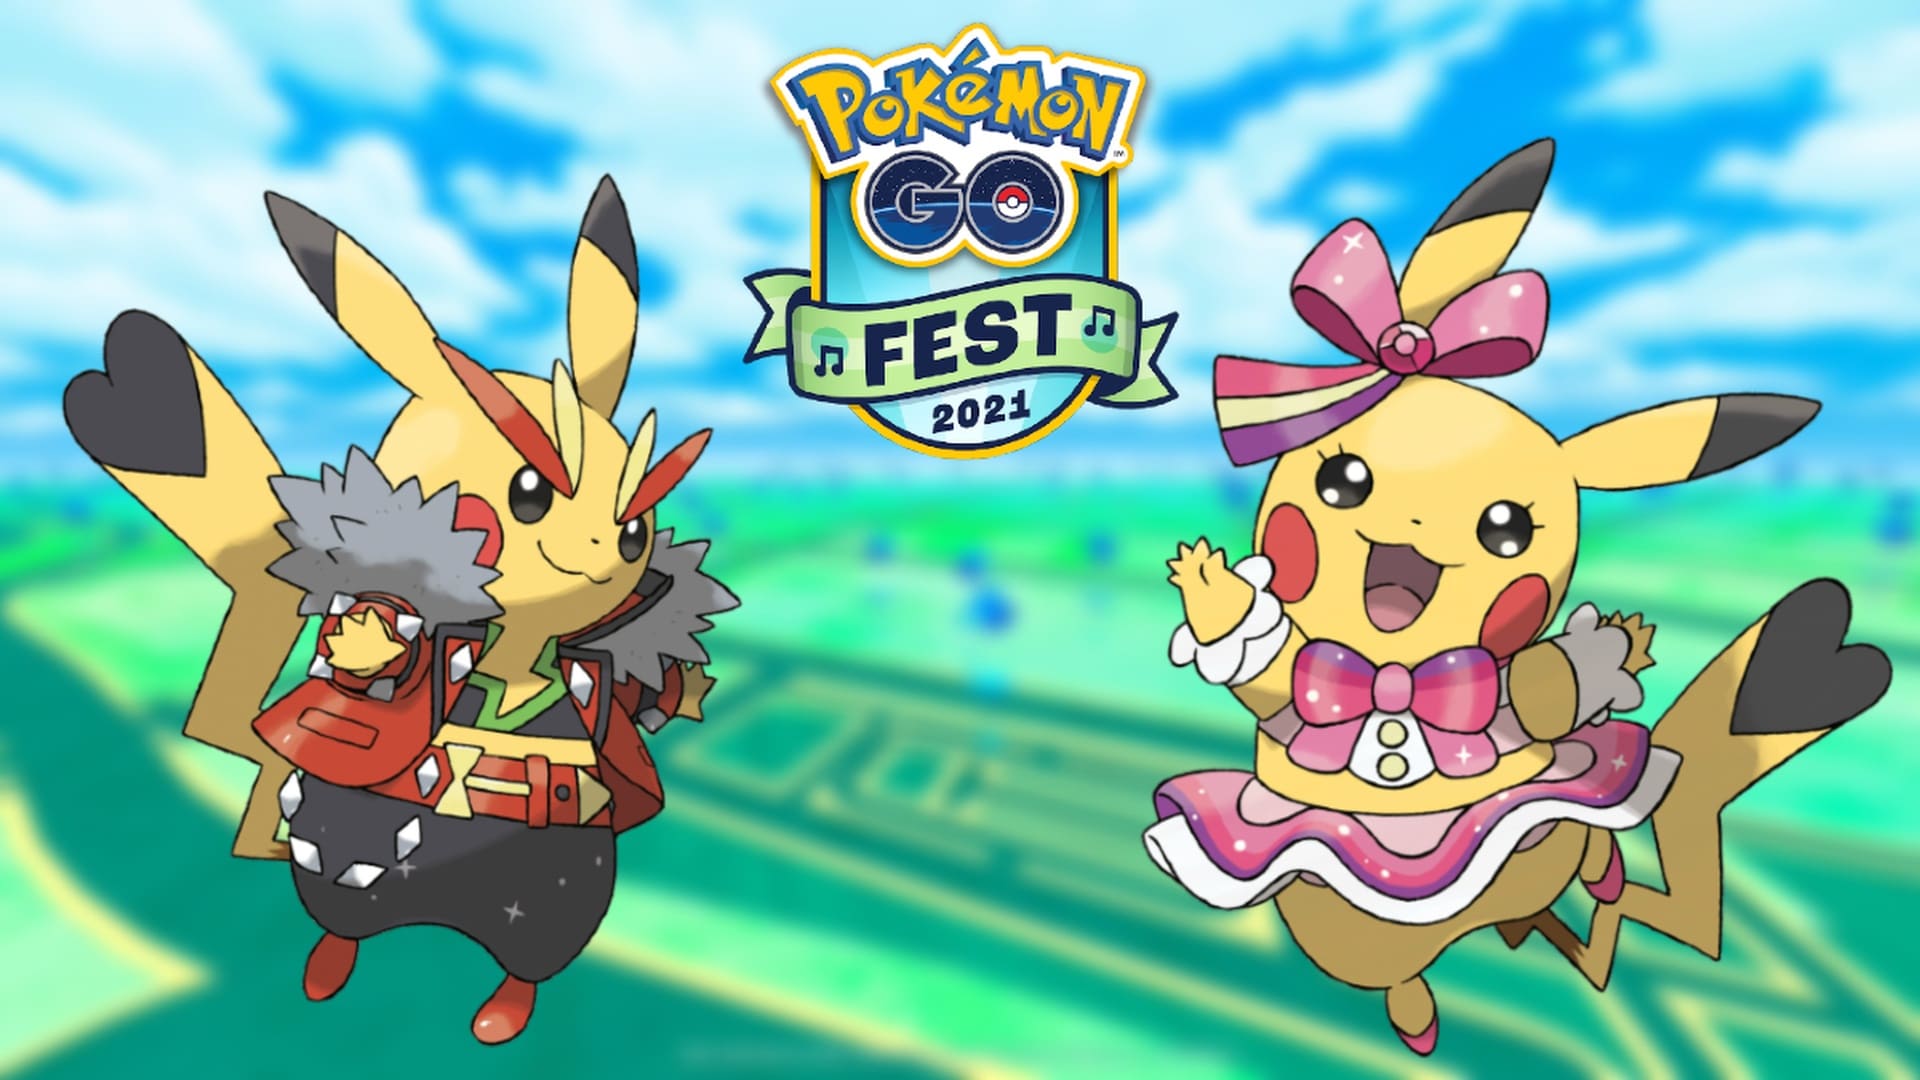 Pokémon GO Fest 2021: Pikachu roquera o Pikachu superstar, ¿cuál es la mejor?